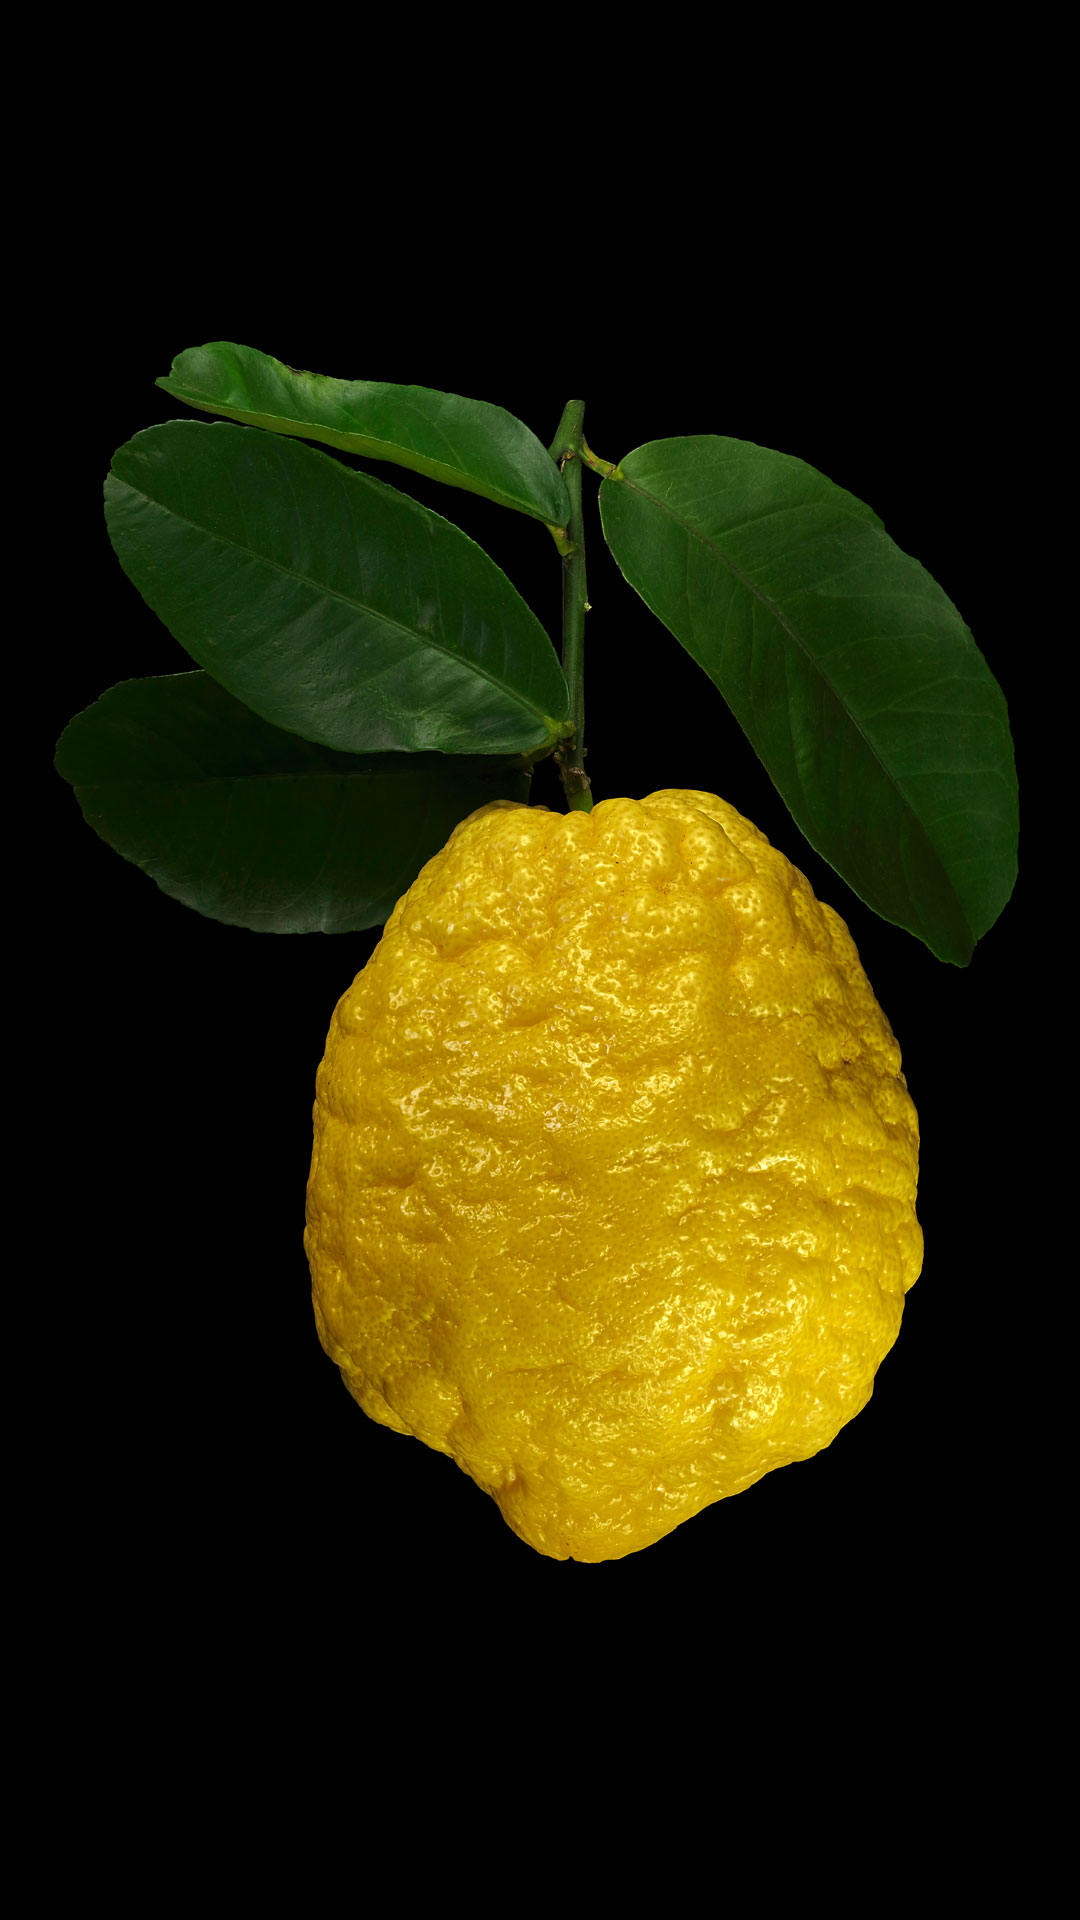 Citron: Citrus medica ‚Maxima‘